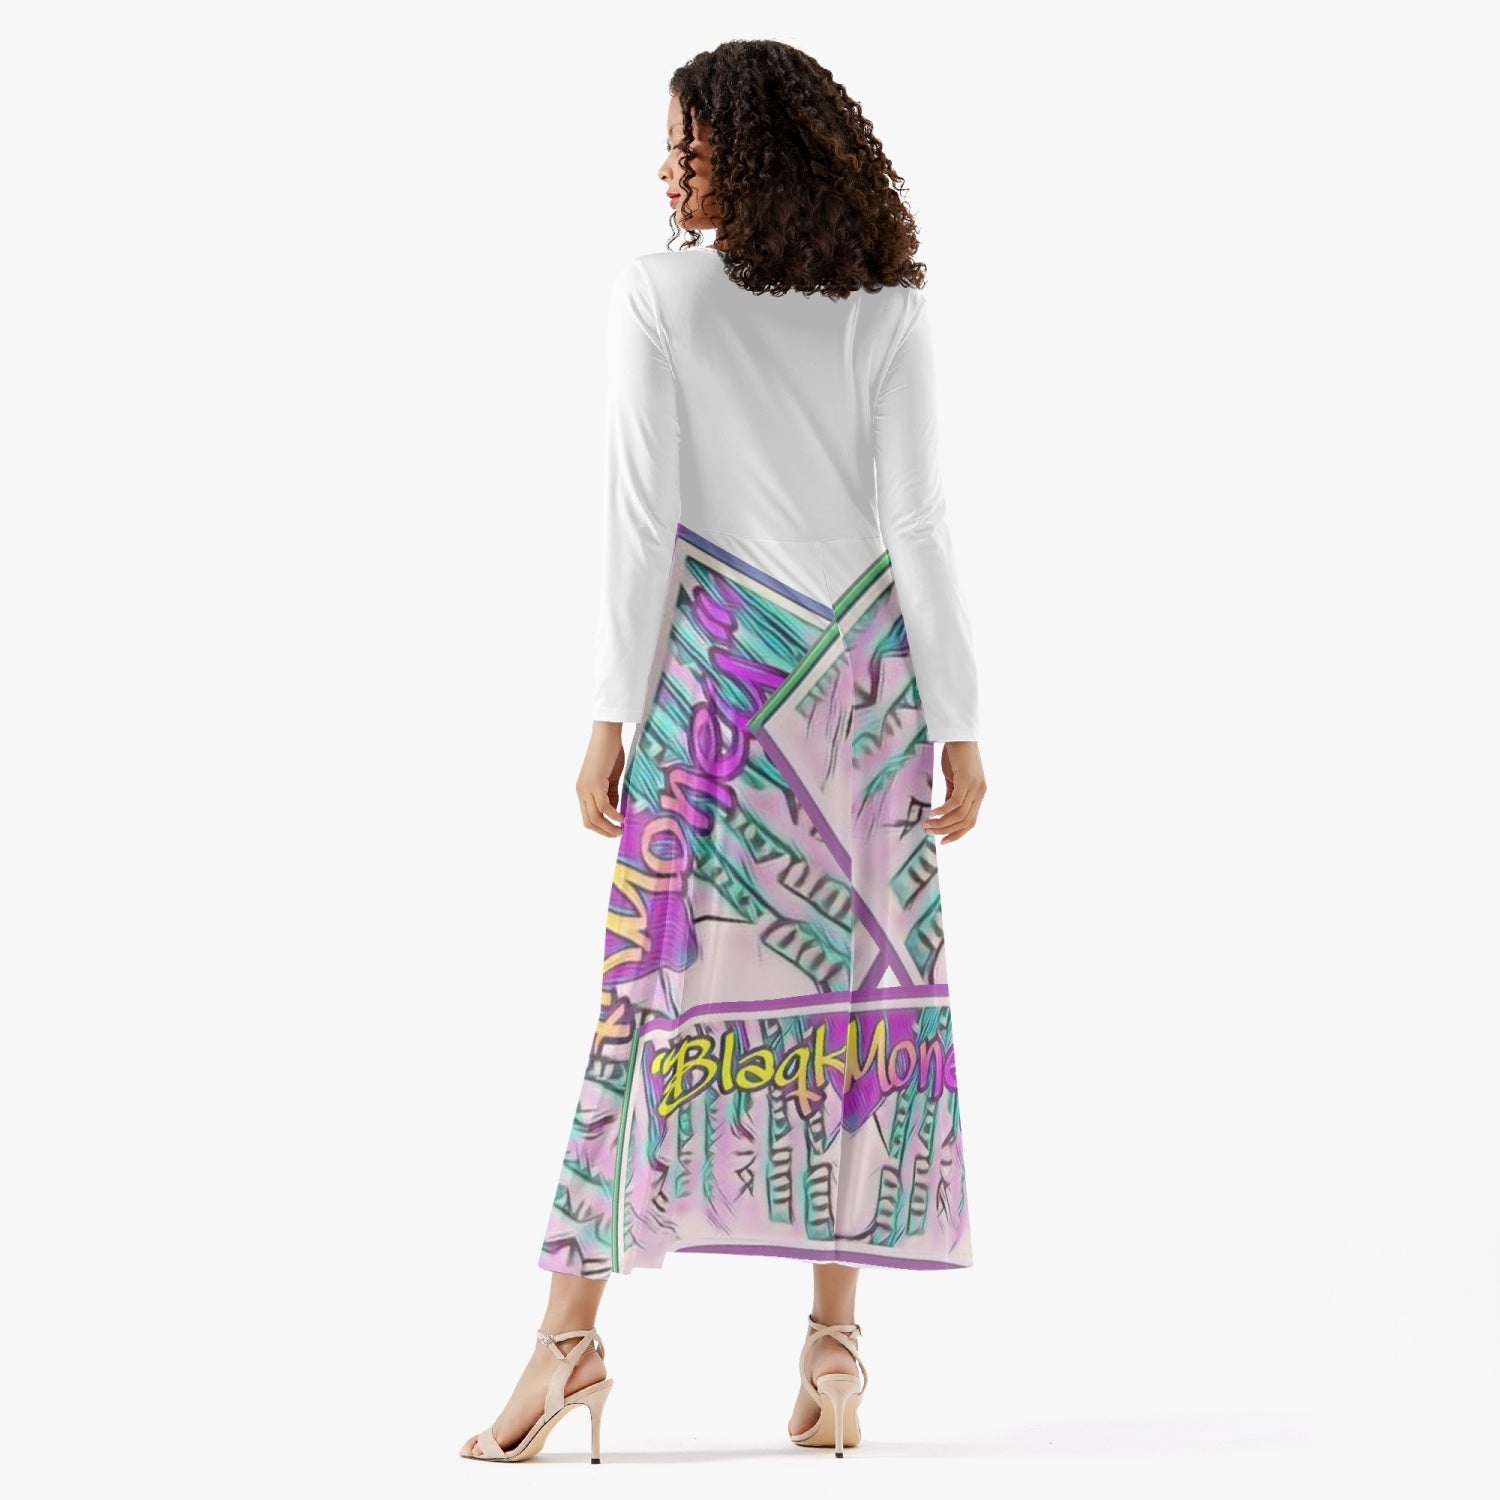 289. Women’s Long-Sleeve One-piece Dress